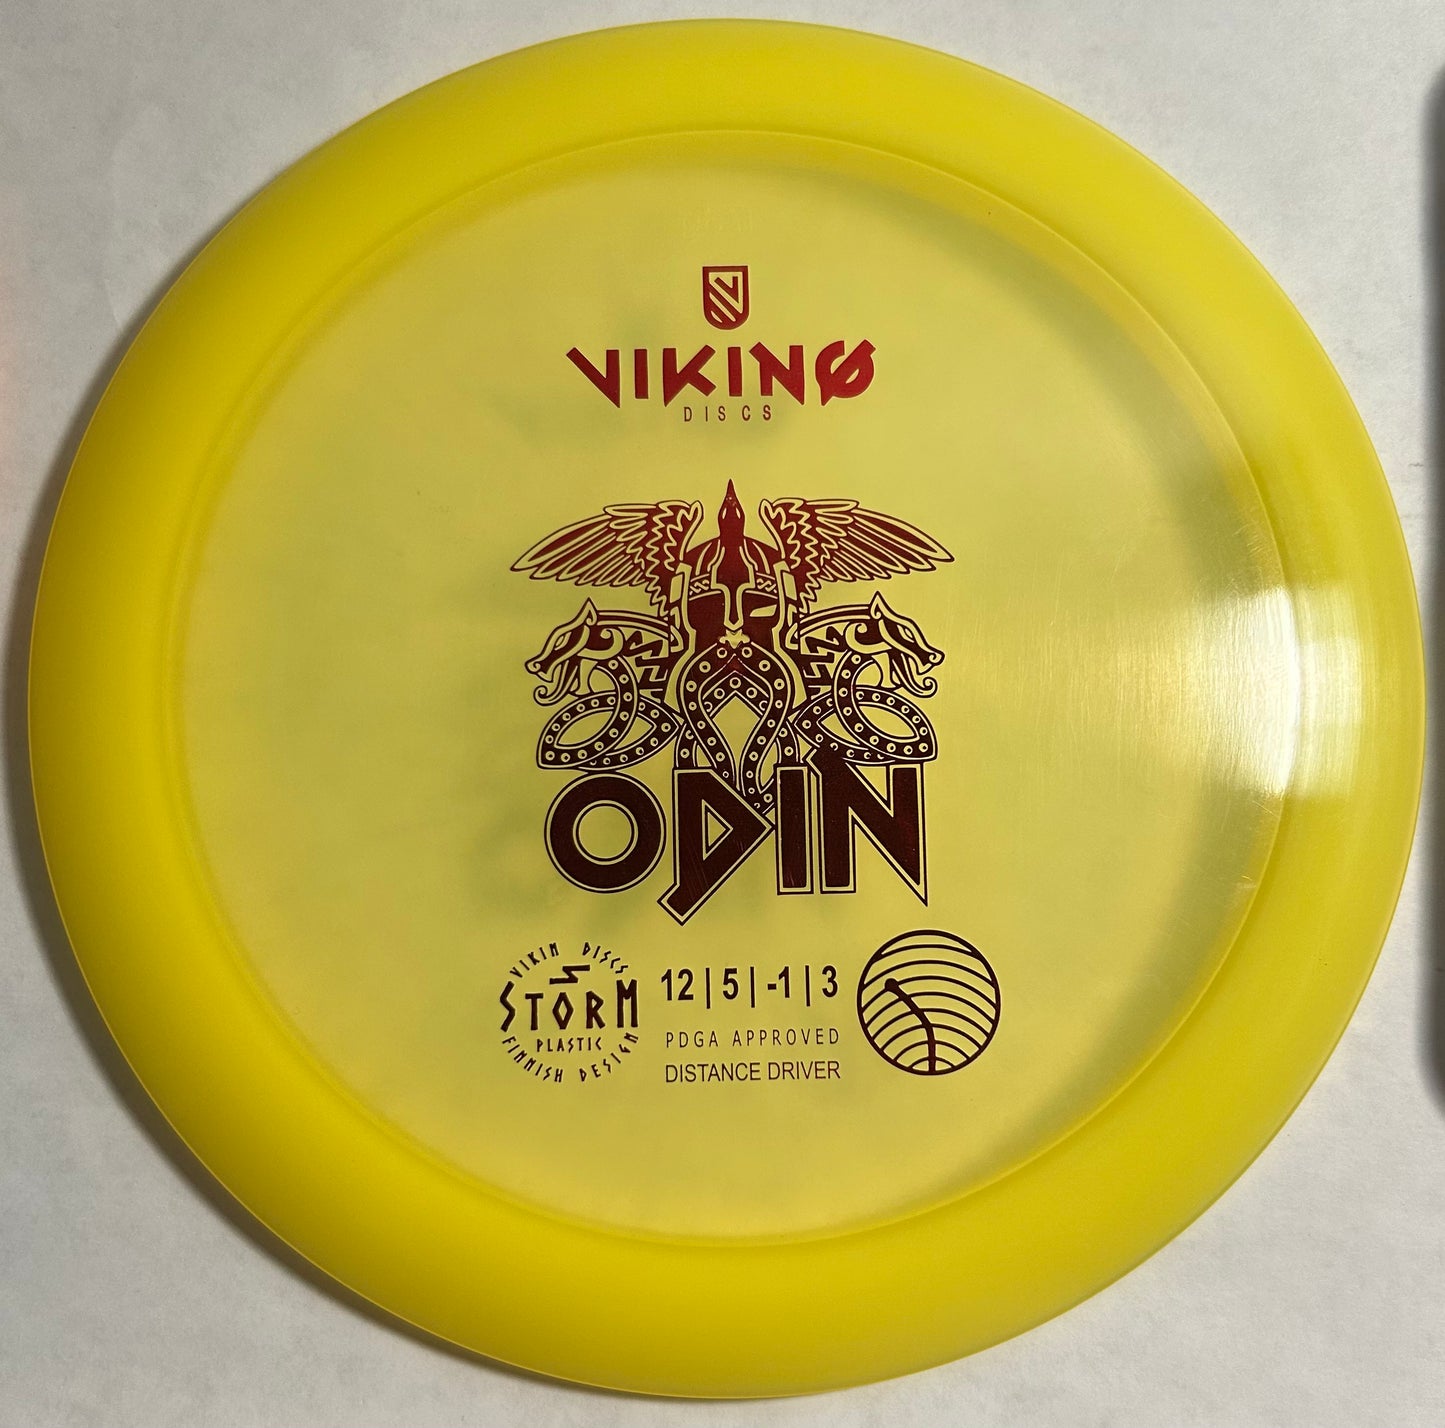 Viking Discs Odin Storm Plastic - 9/10 - 173g